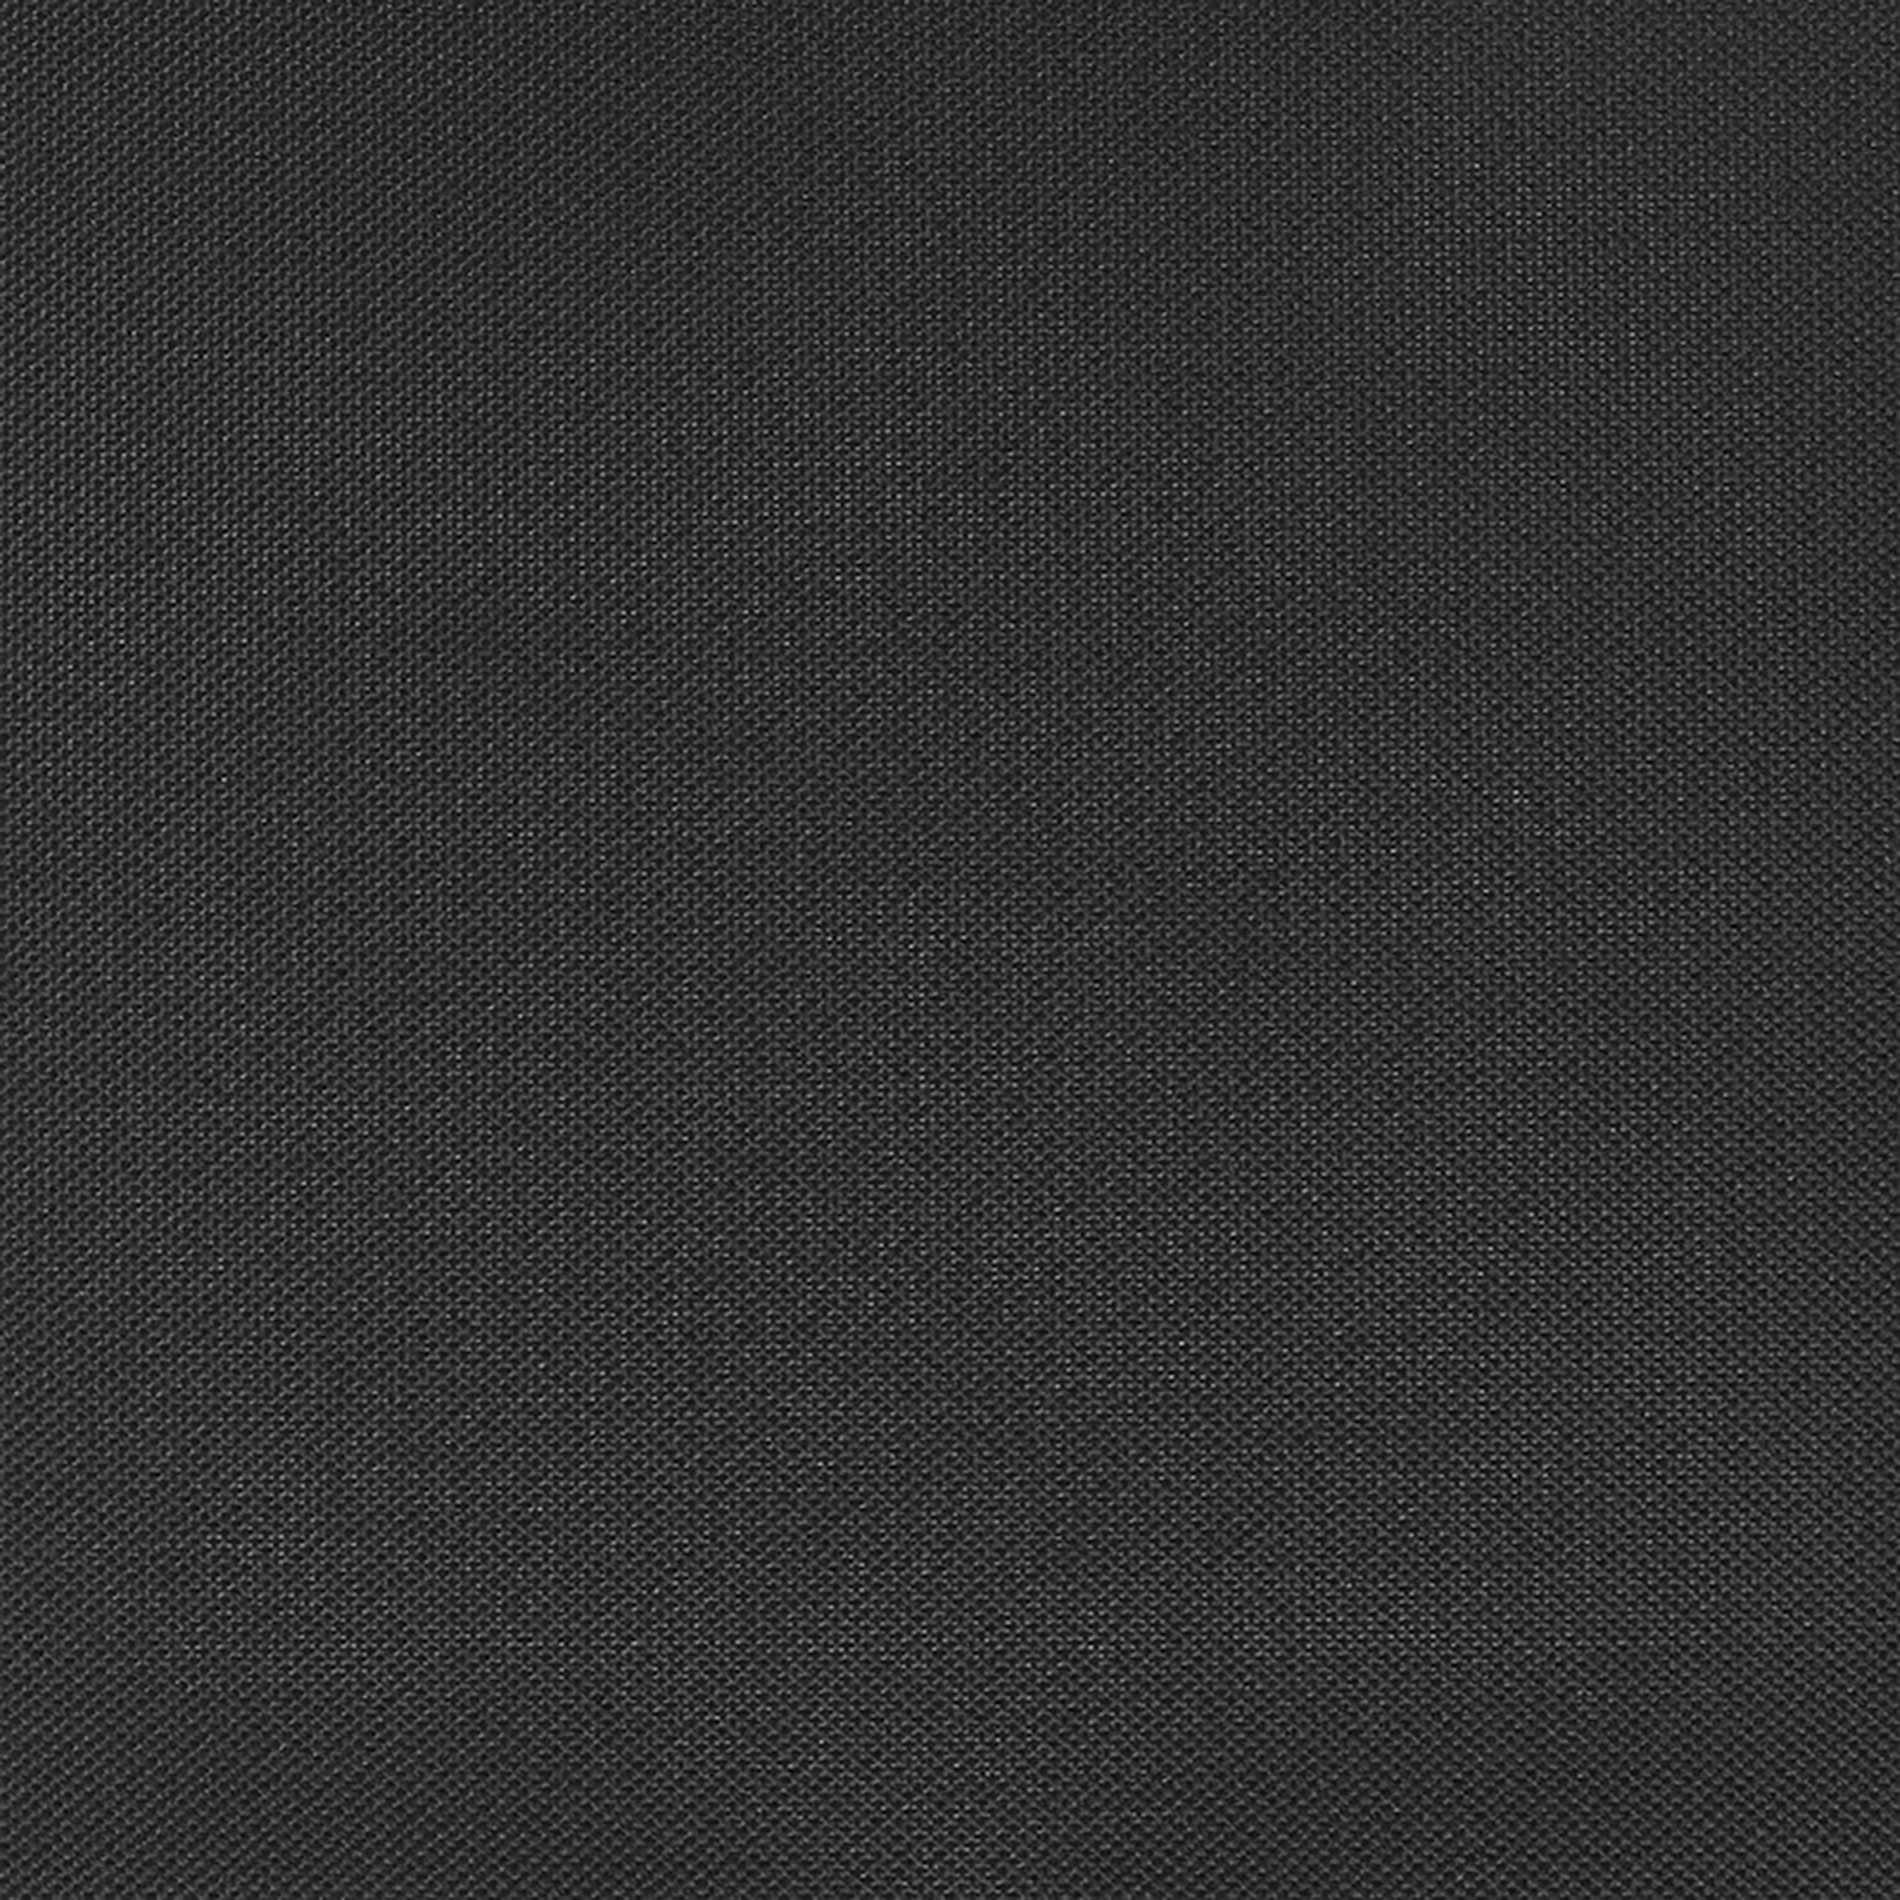 Altex - Fabric - ECOSCREEN 119600 - Charcoal Grey/Metallized - 119608